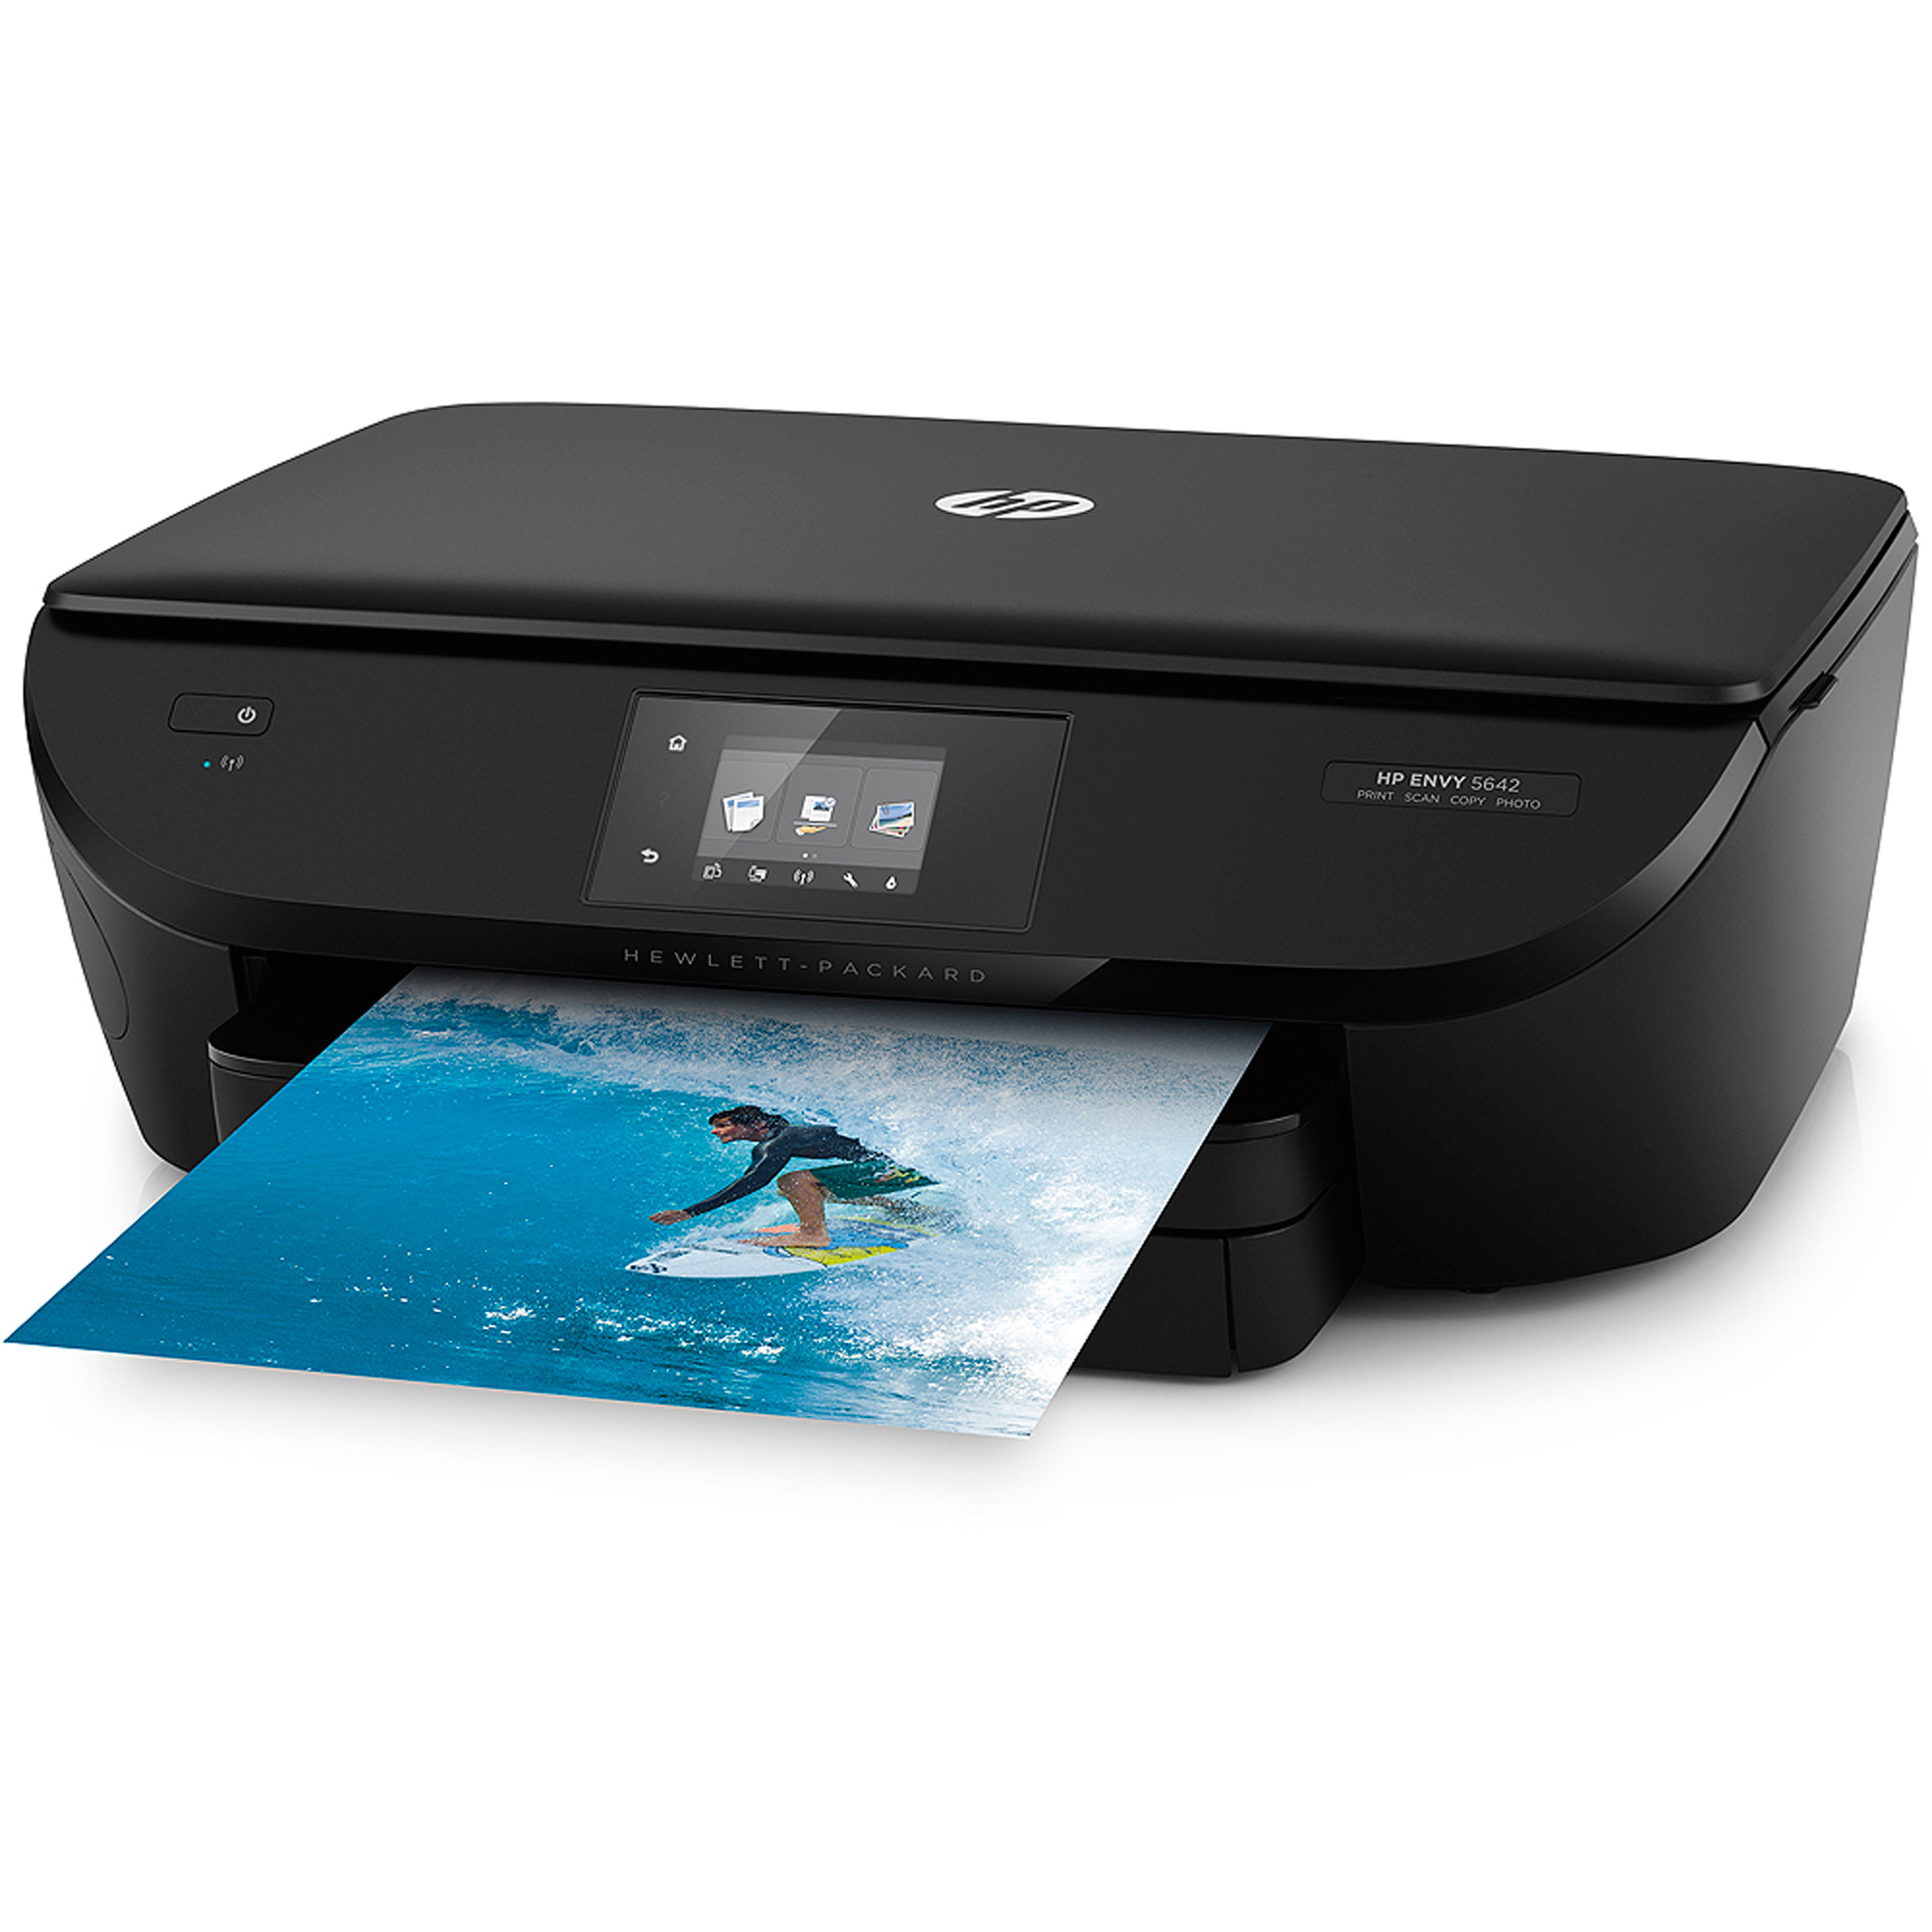 HP Envy 5642 All-in-One Printer/Copier/Scanner - image 3 of 4